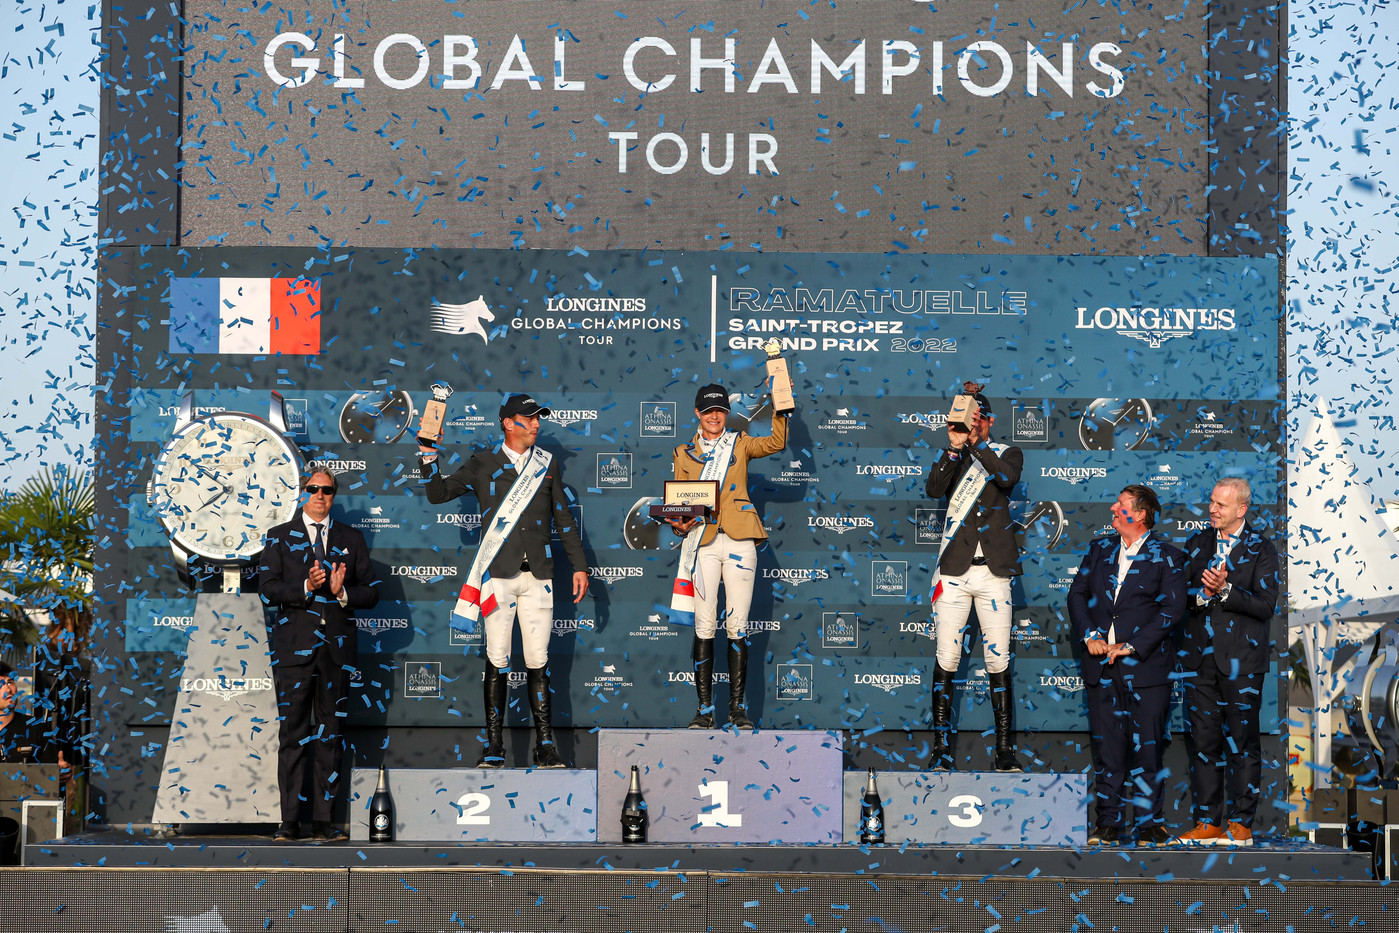 longines global champions tour dress code